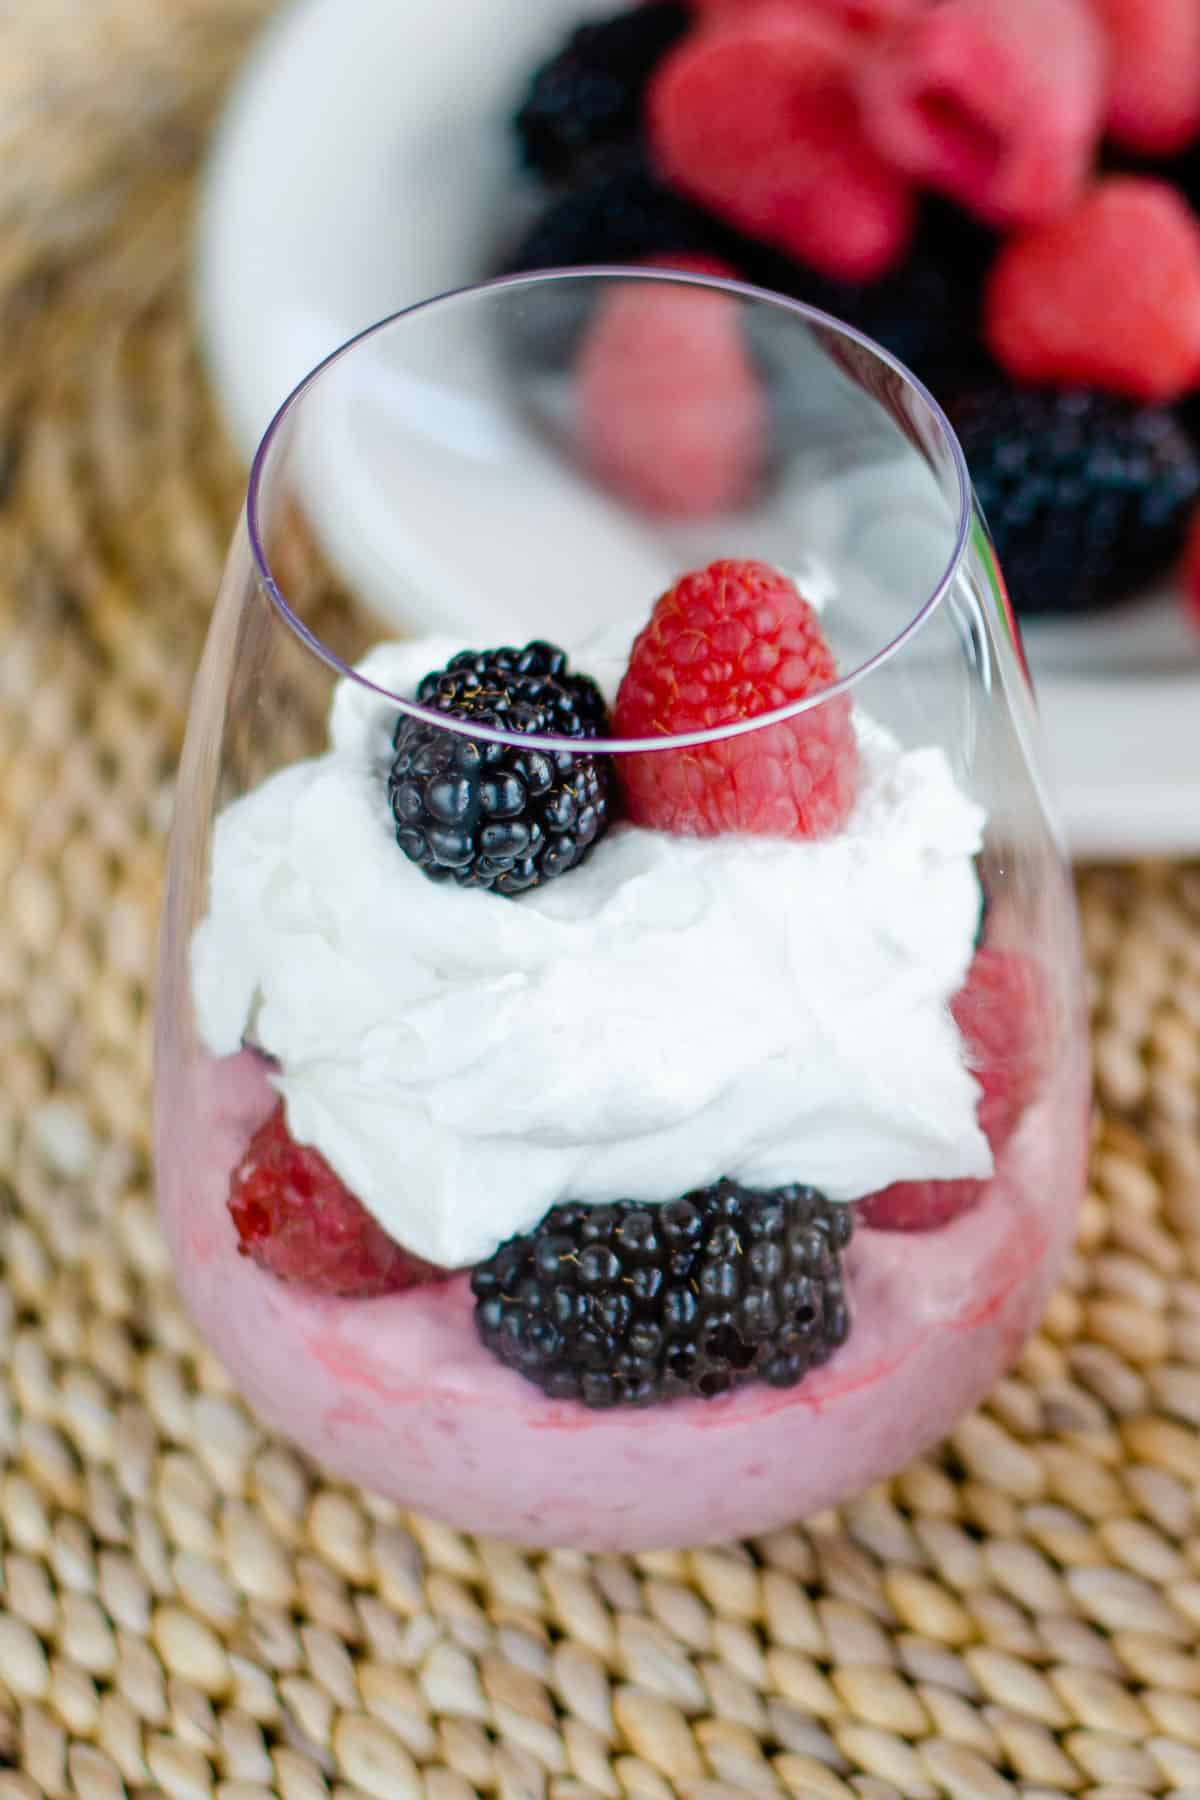 Raspberries and cream with fresh berries